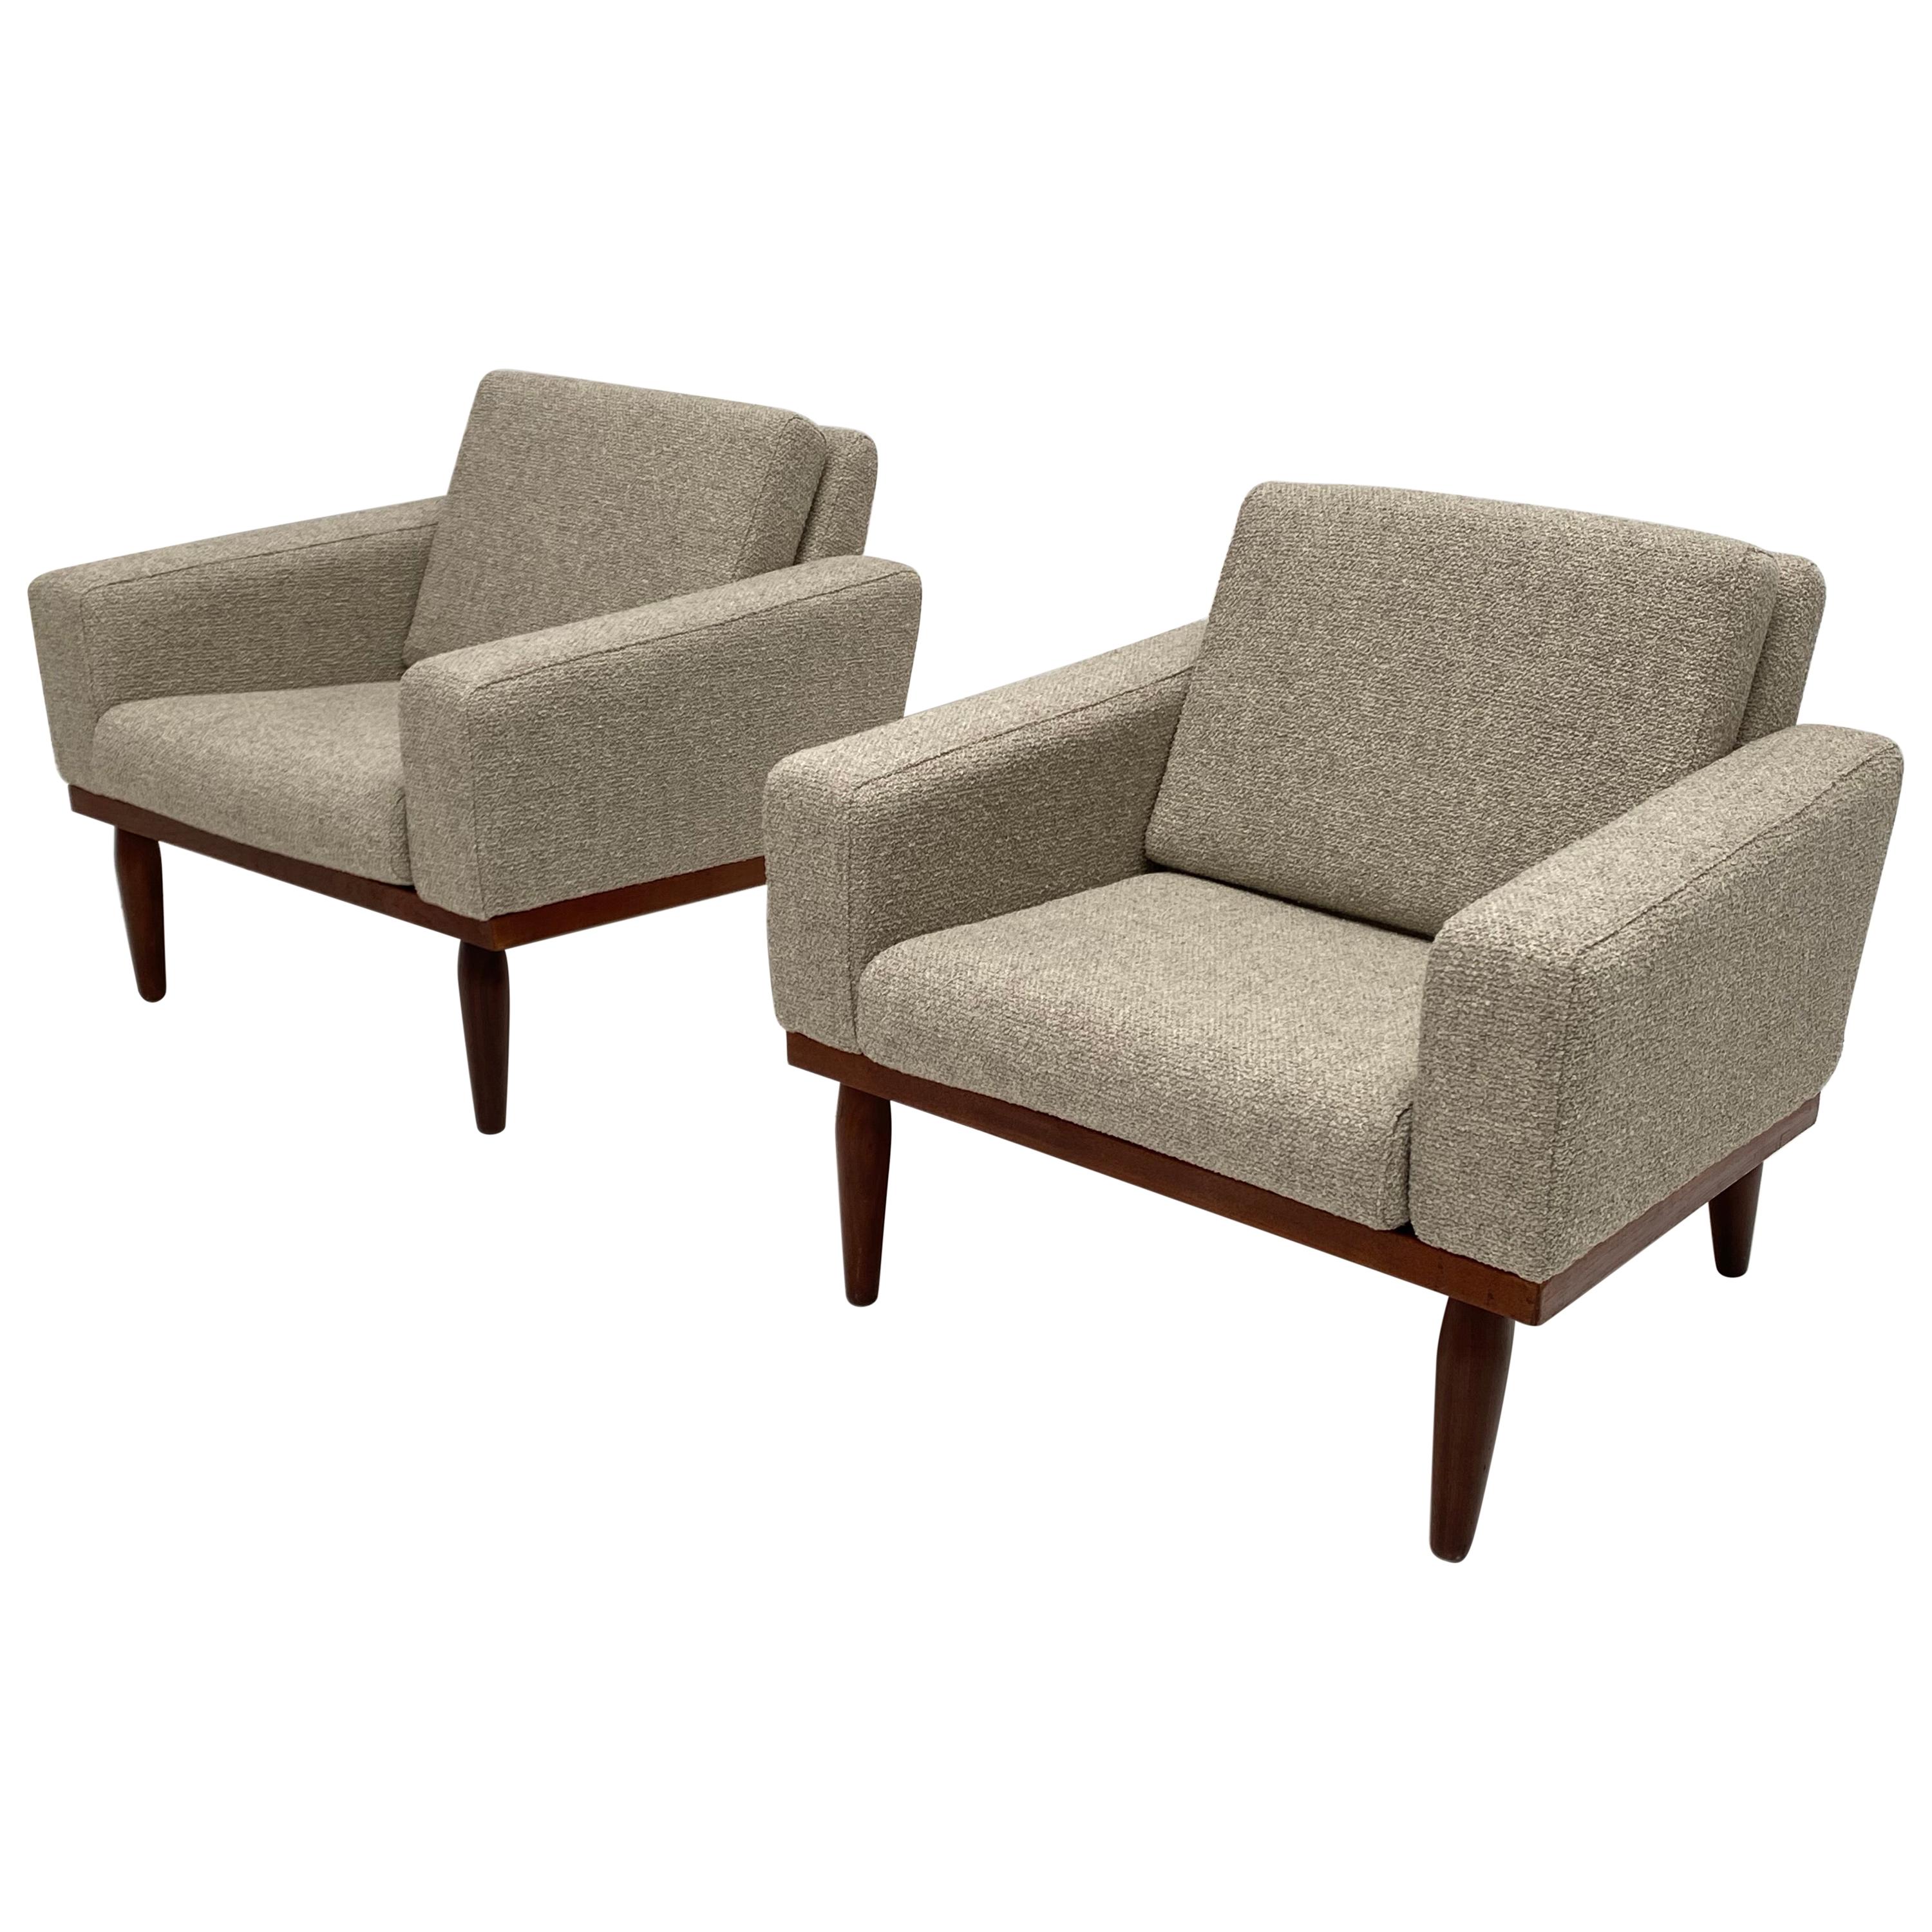 Pair of Danish Teak 1950s Lounge Chairs Bovenkamp The Netherlands New Upholstery For Sale